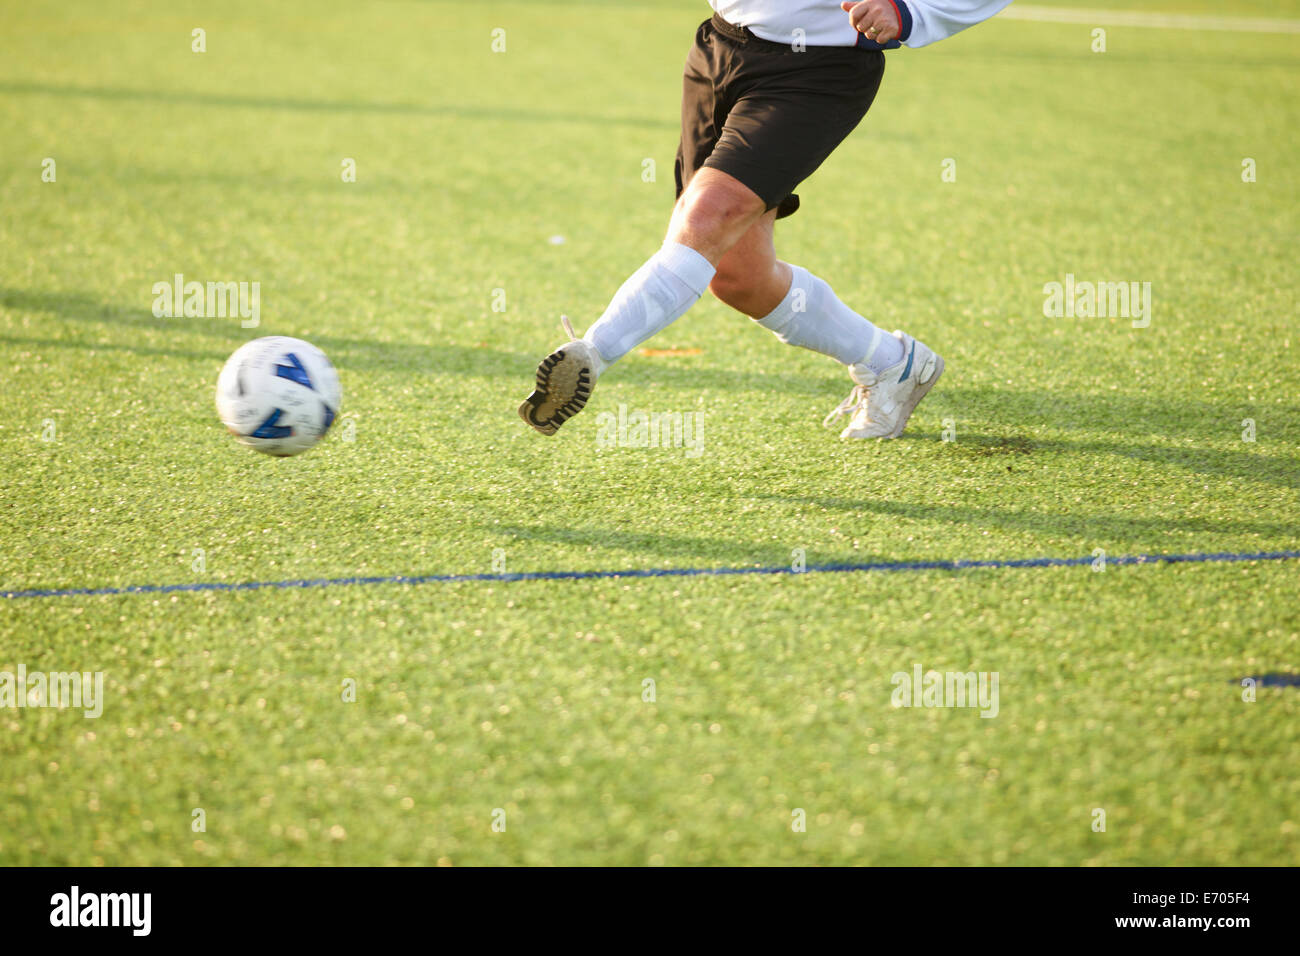 Football player kicking ball Banque D'Images